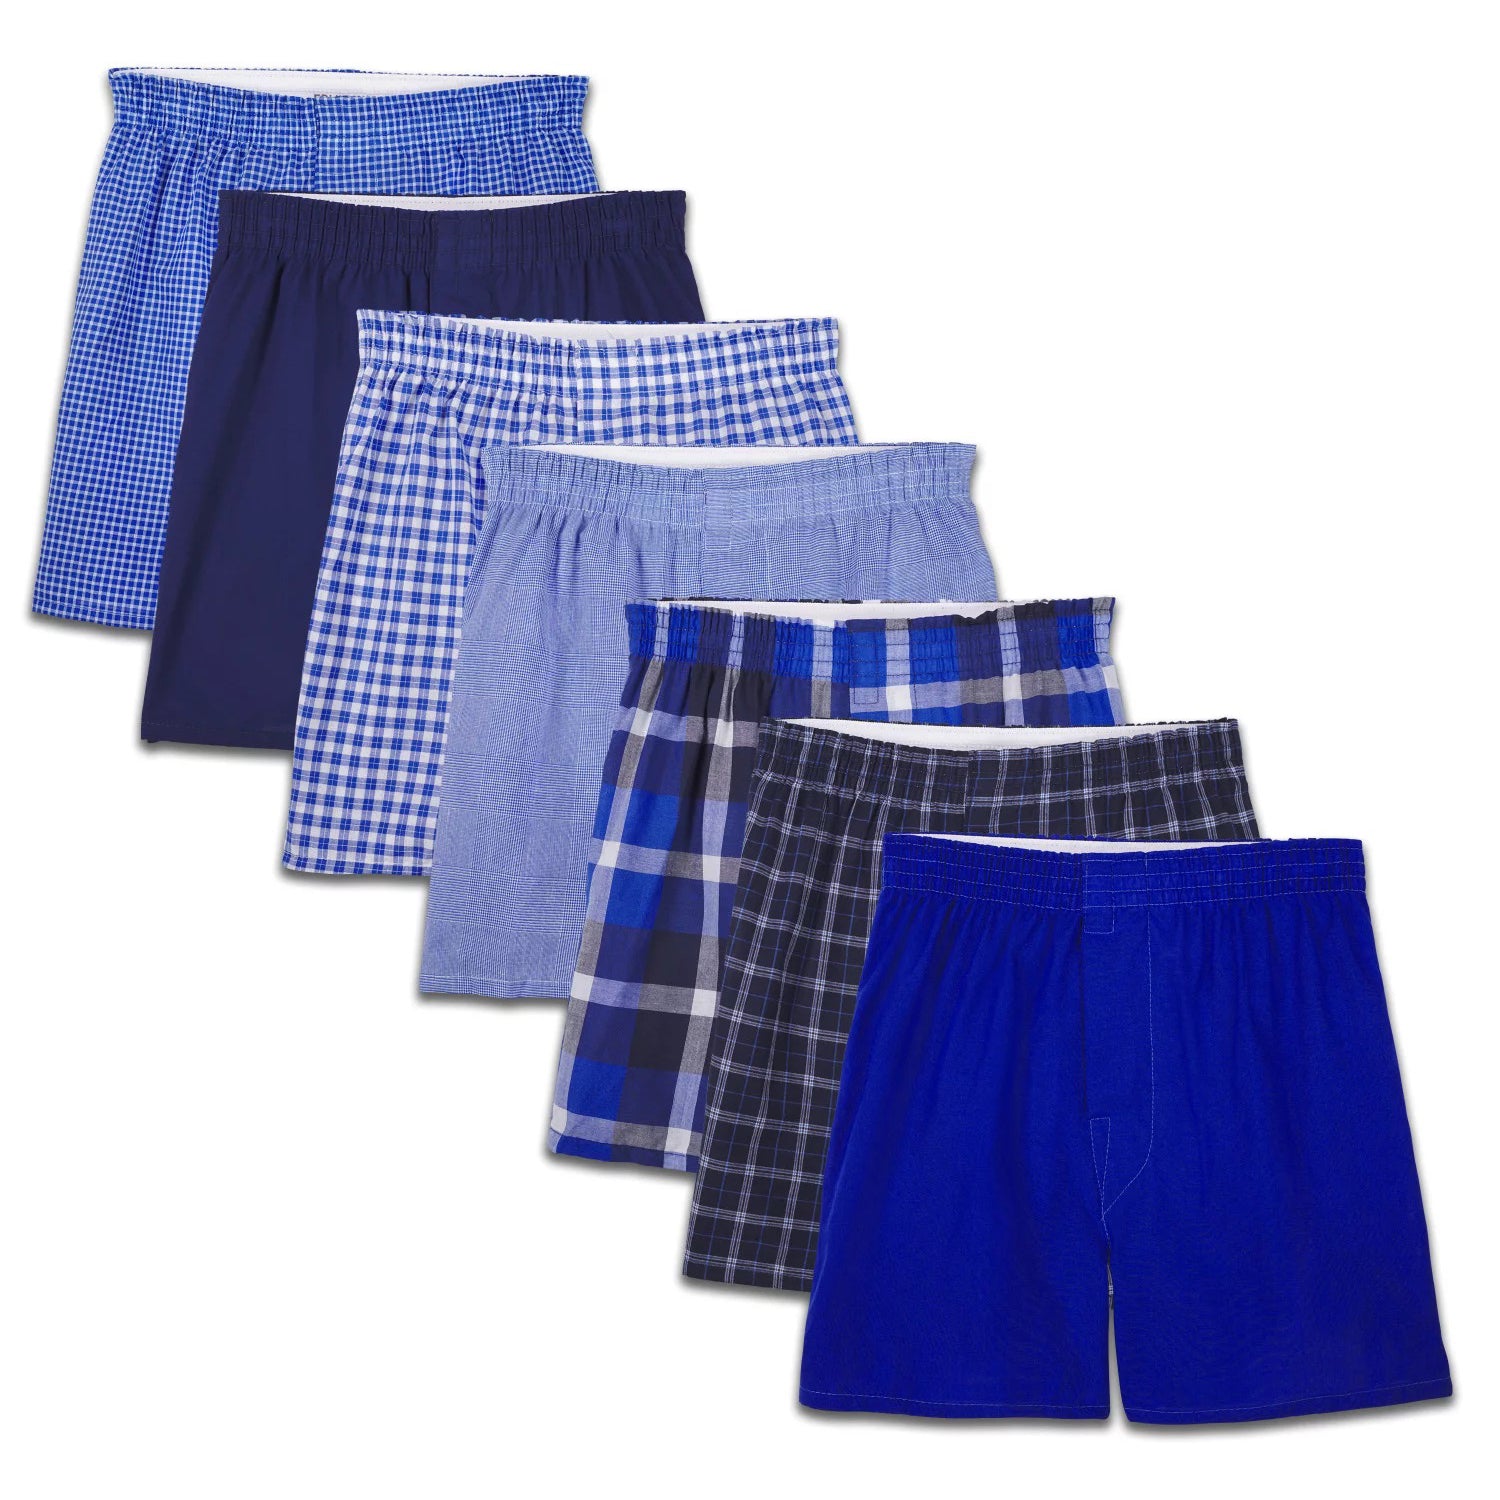 Buy LAK 18 Men's Briefs Ice Silk Boxers Briefs Underwear Set Boxer Shorts  for Men, Pack of 1, Multicolored